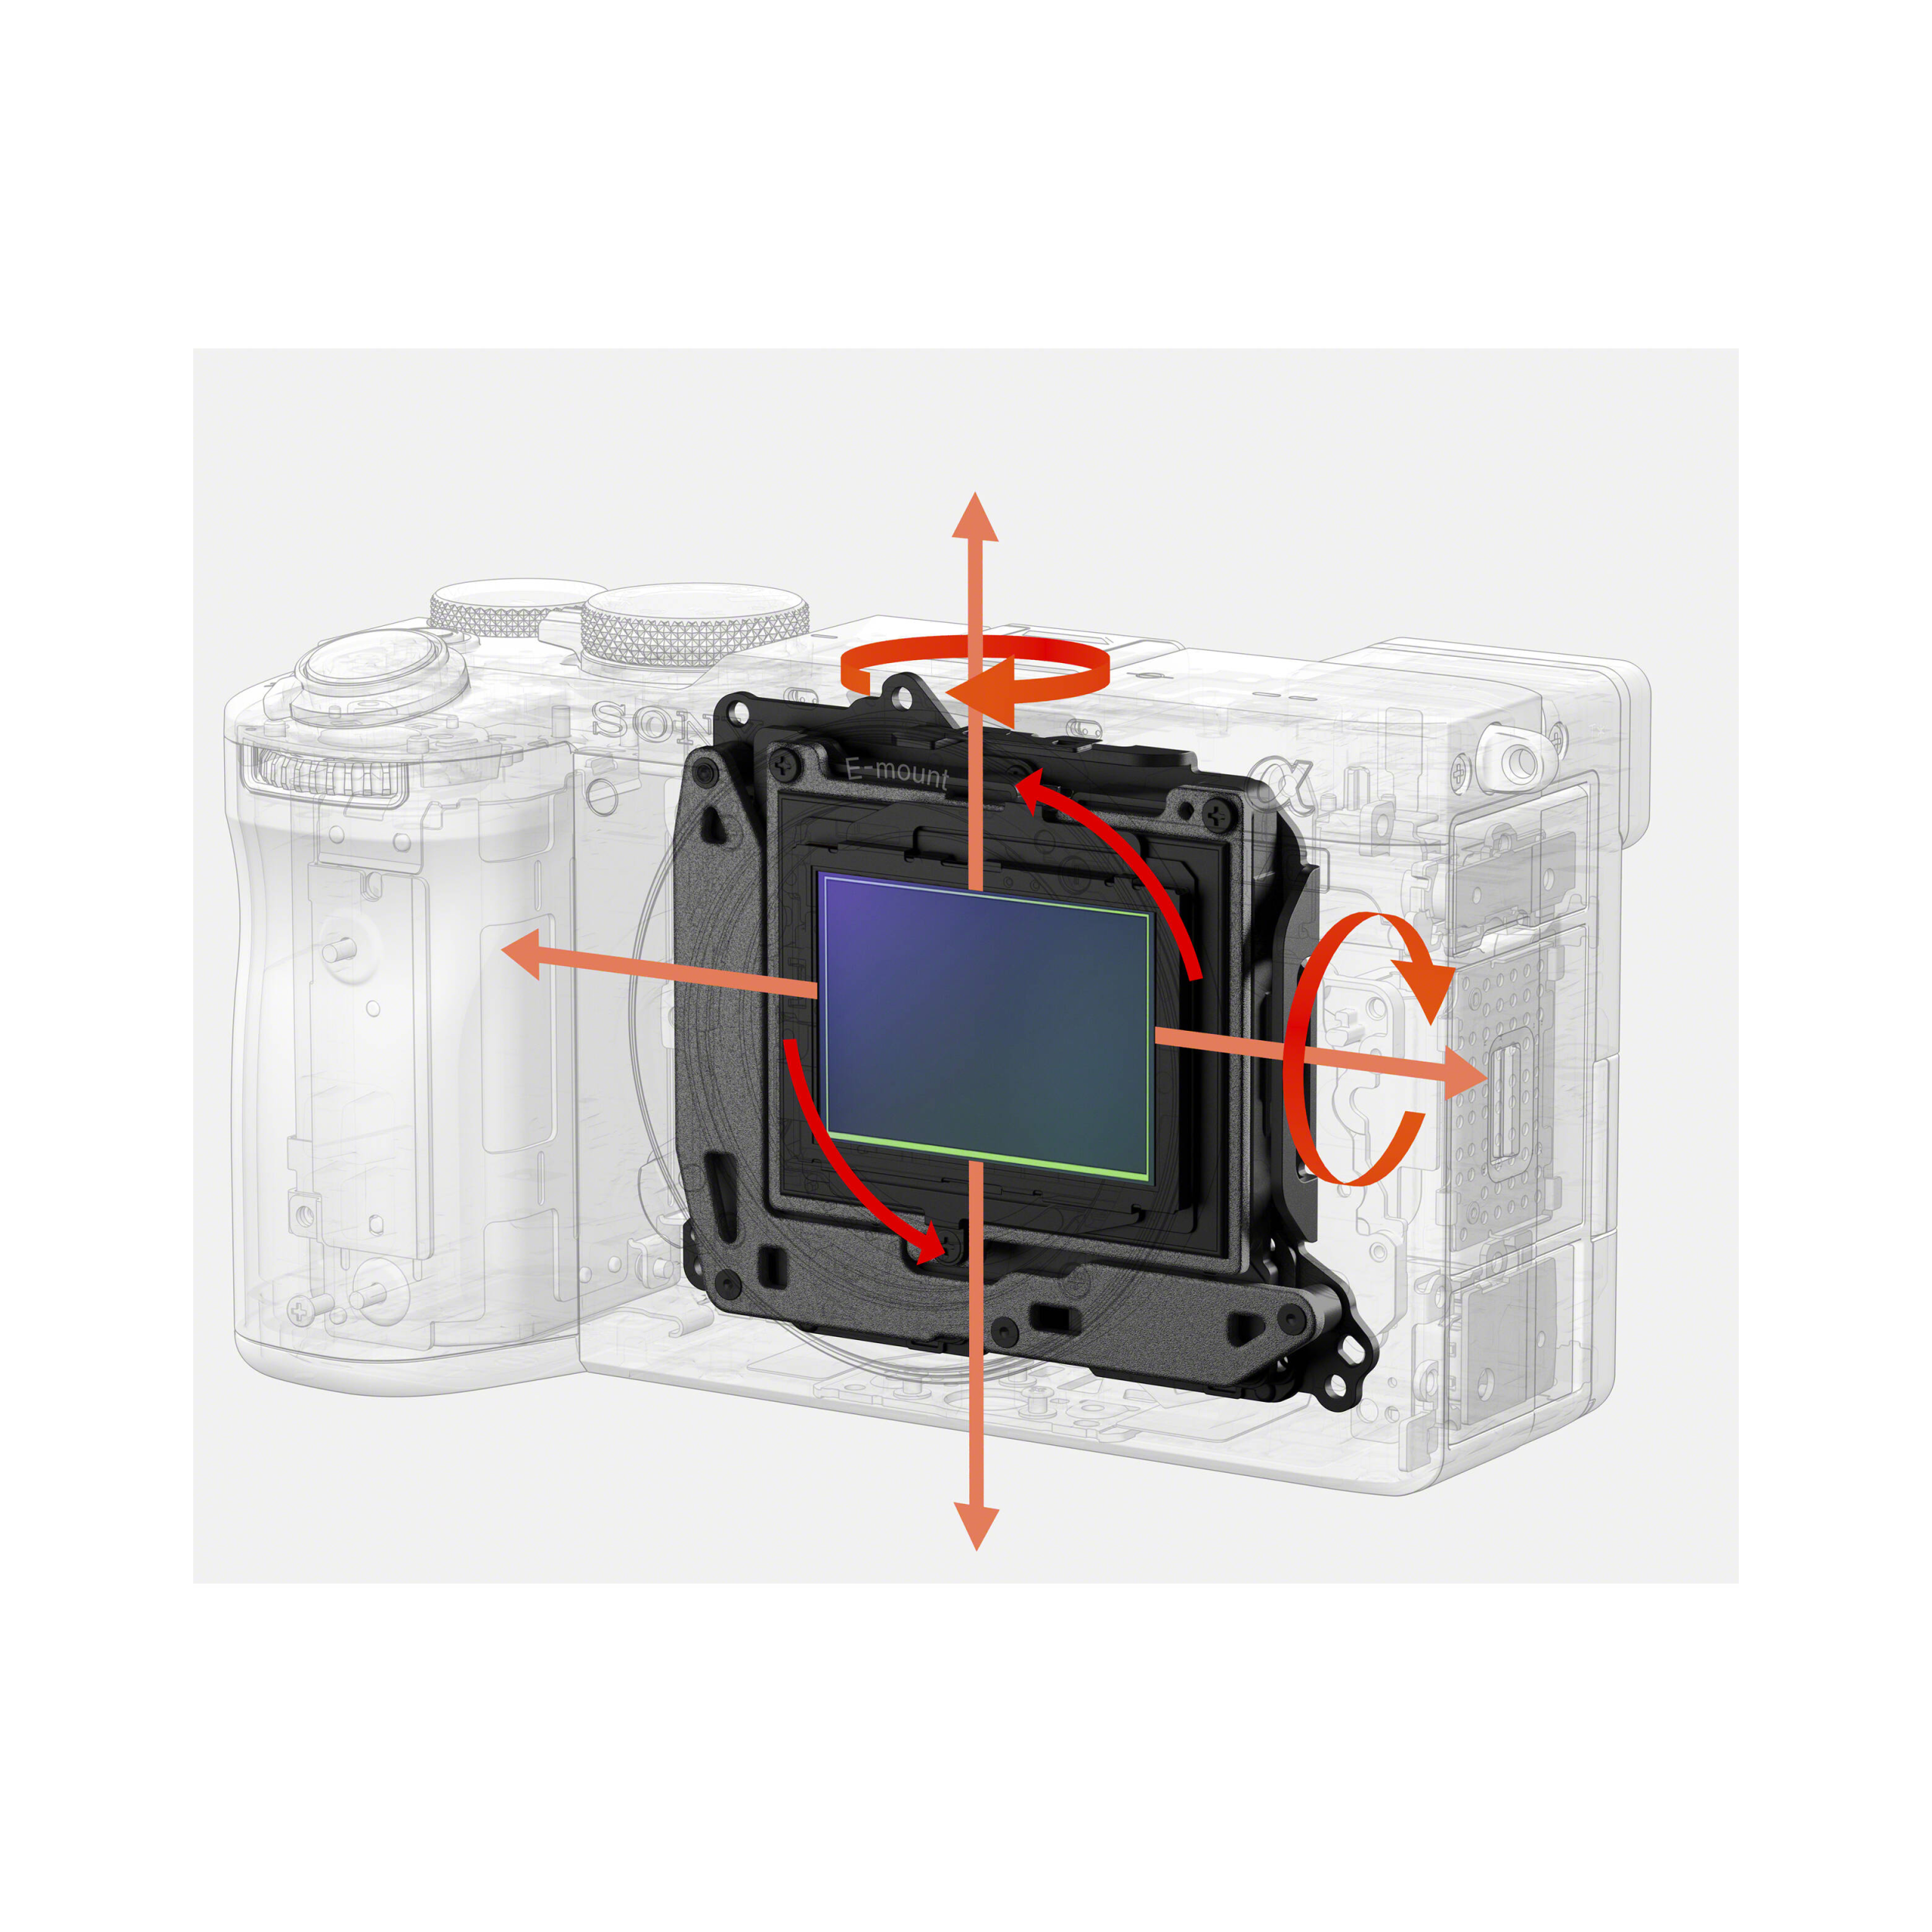 Caméra sans miroir Sony A7C II avec objectif de 28-60 mm - argent